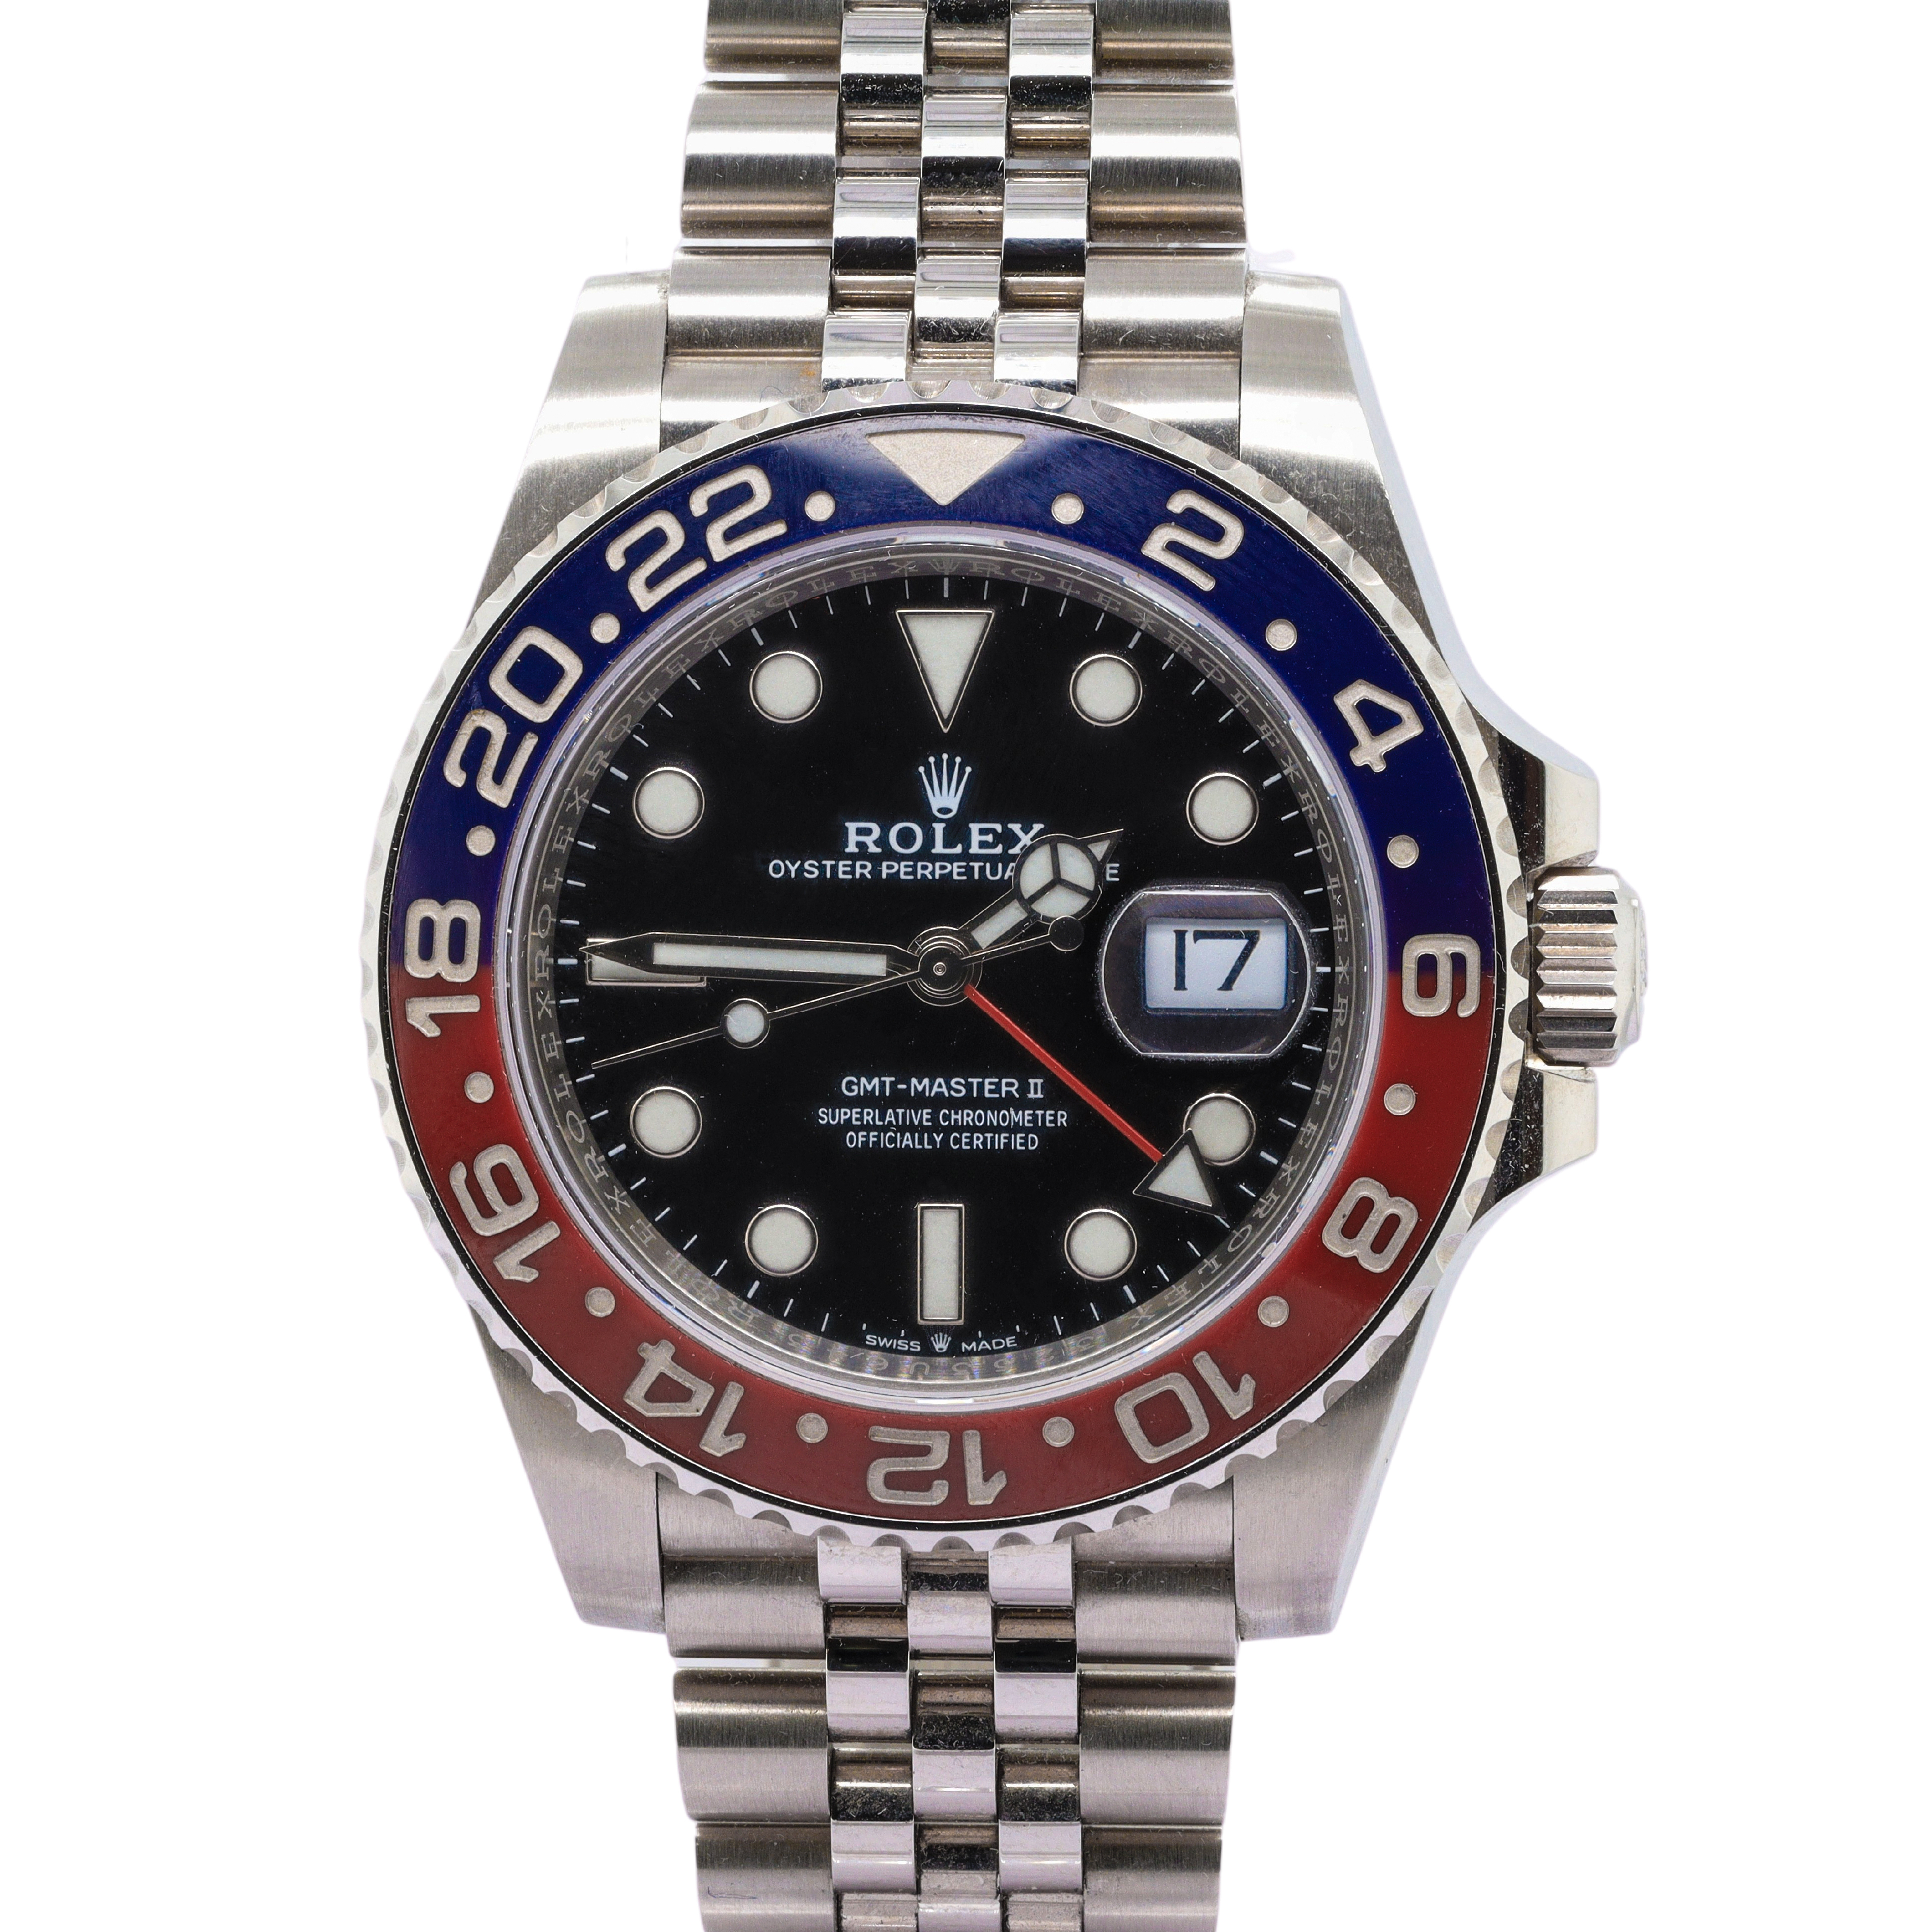 Monary Rolex Date GMT - Master II Pepsi Stainless Steel Jubilee Bracelet Black Dial, Pepsi Bezel Watch